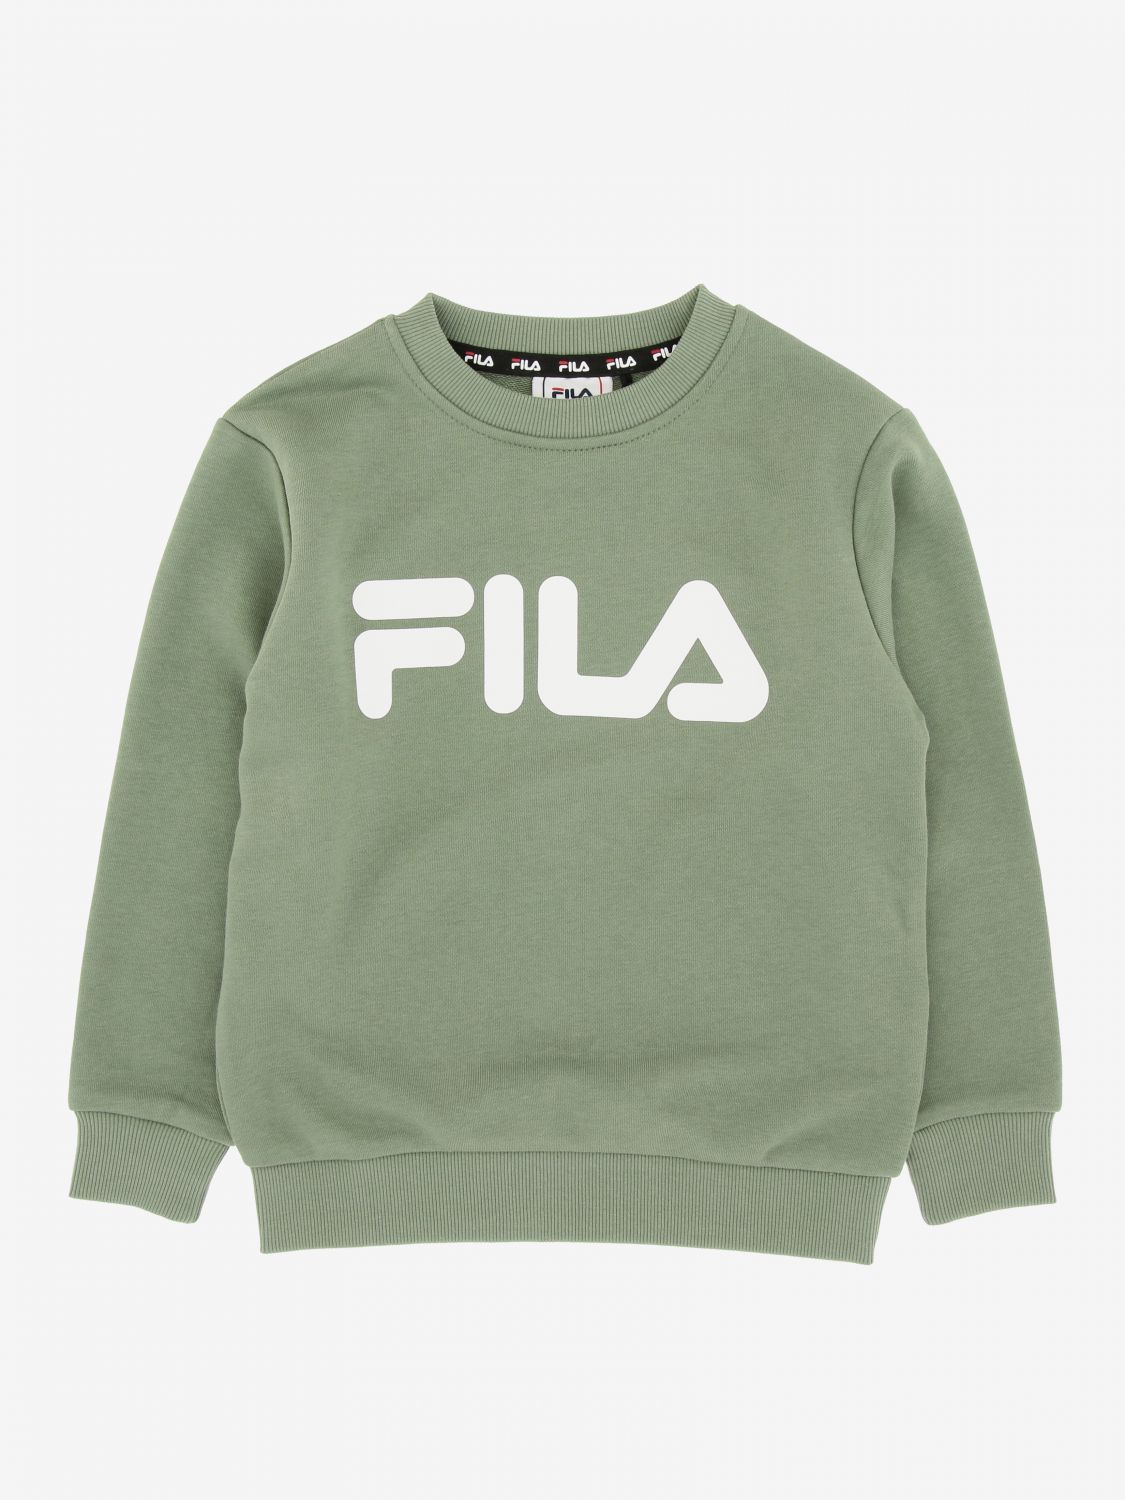 fila green jumper